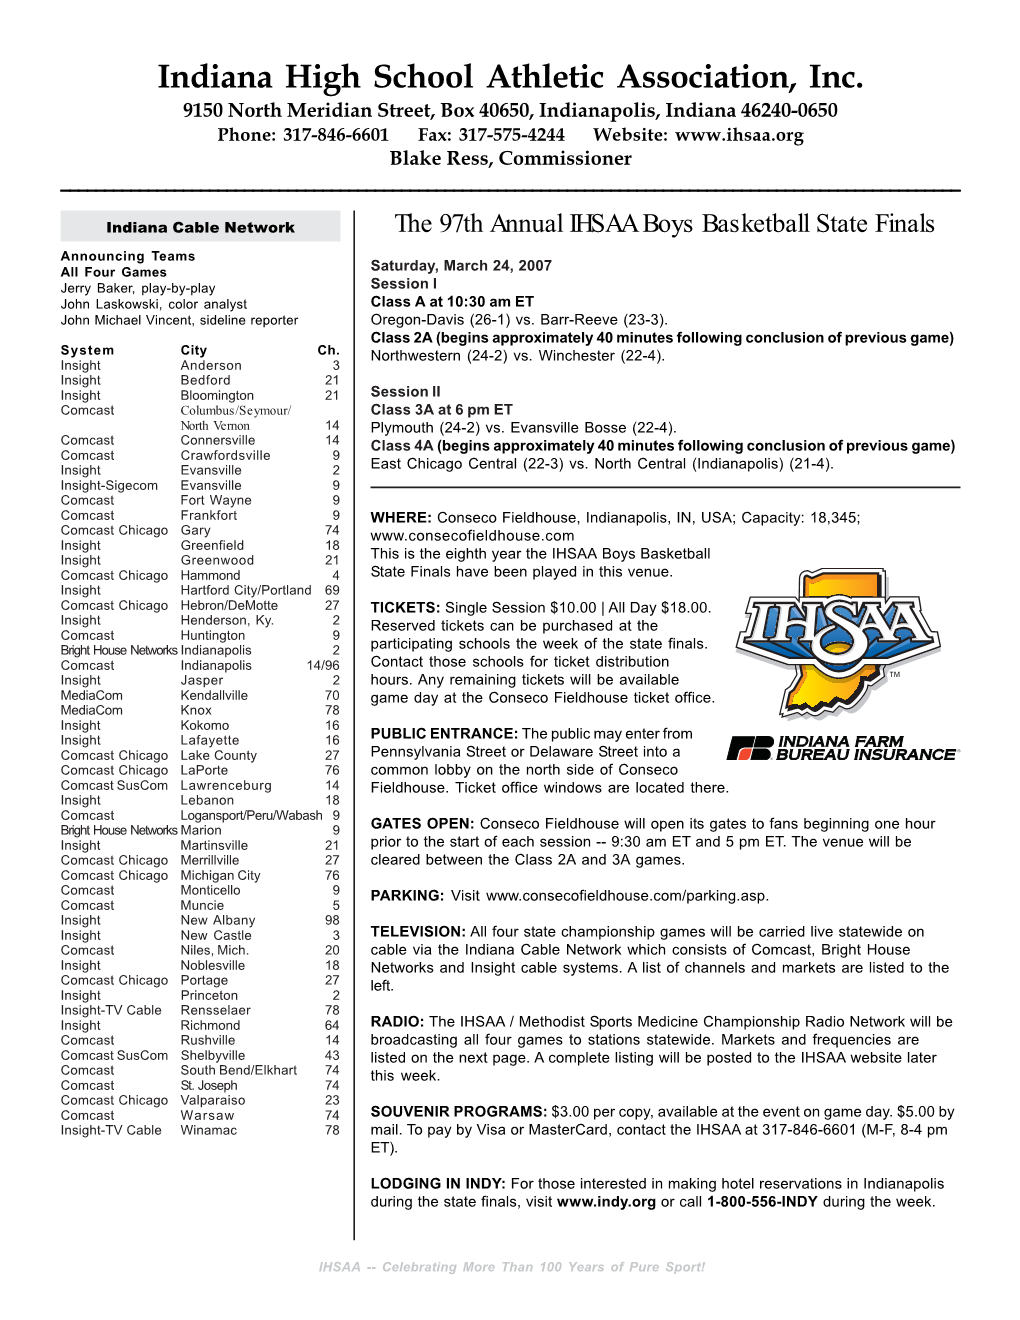 IHSAA Boys Basketball State Finals Media Information 3-19-07